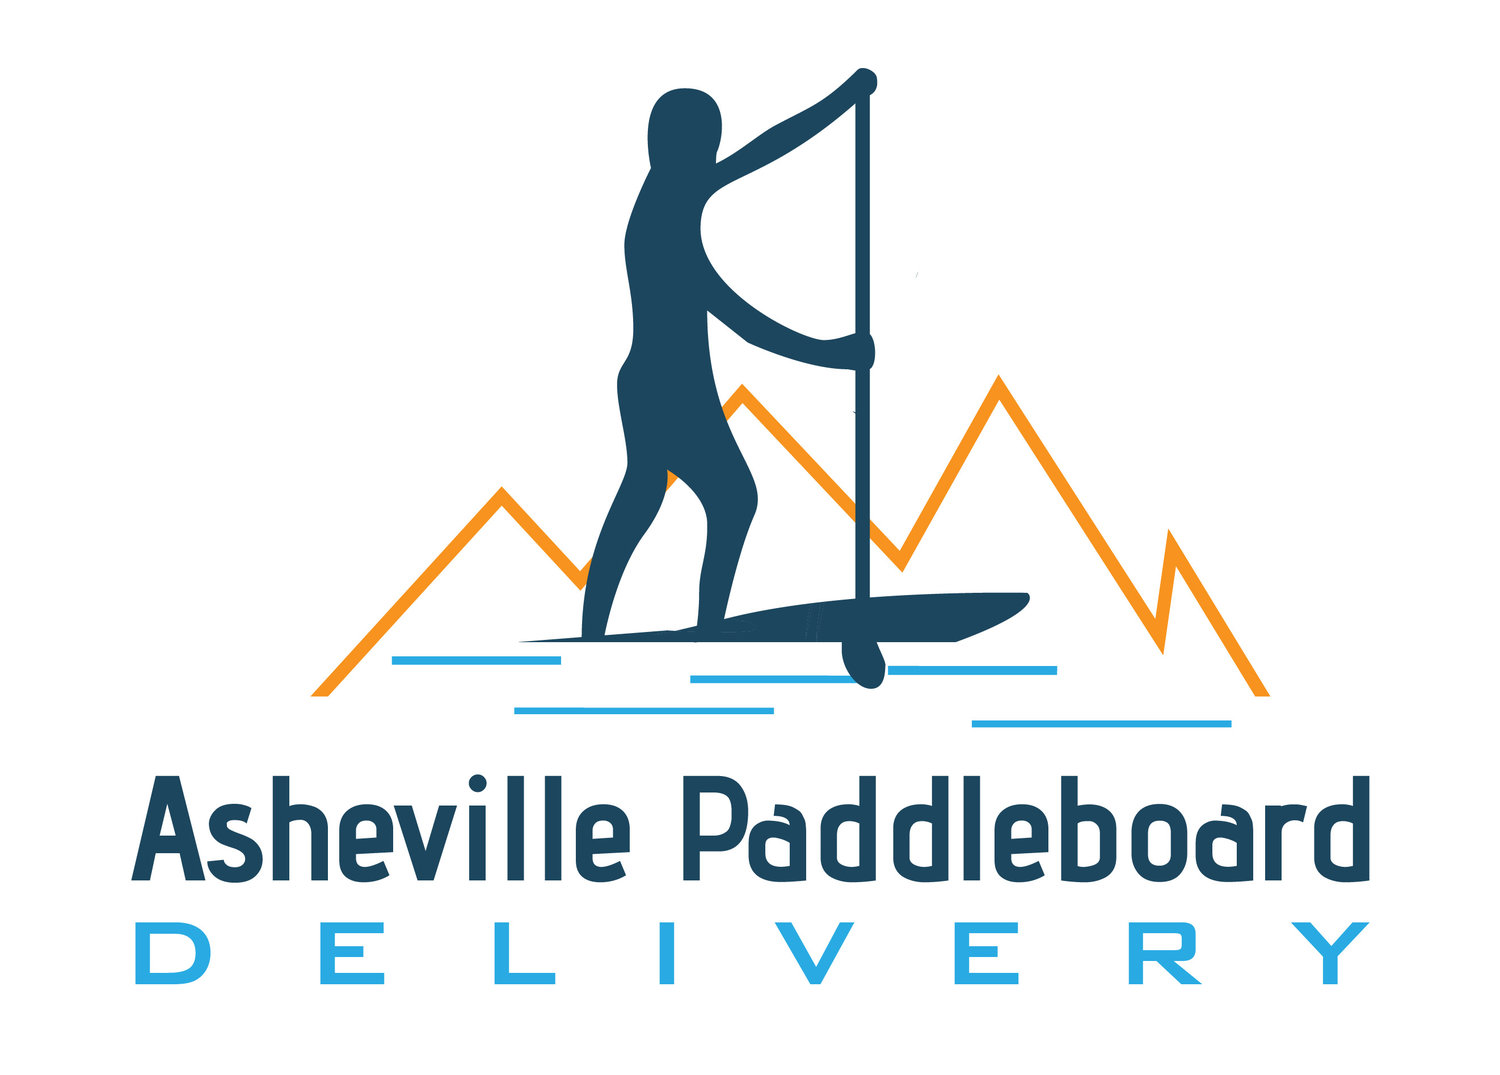 Asheville Paddleboard Delivery